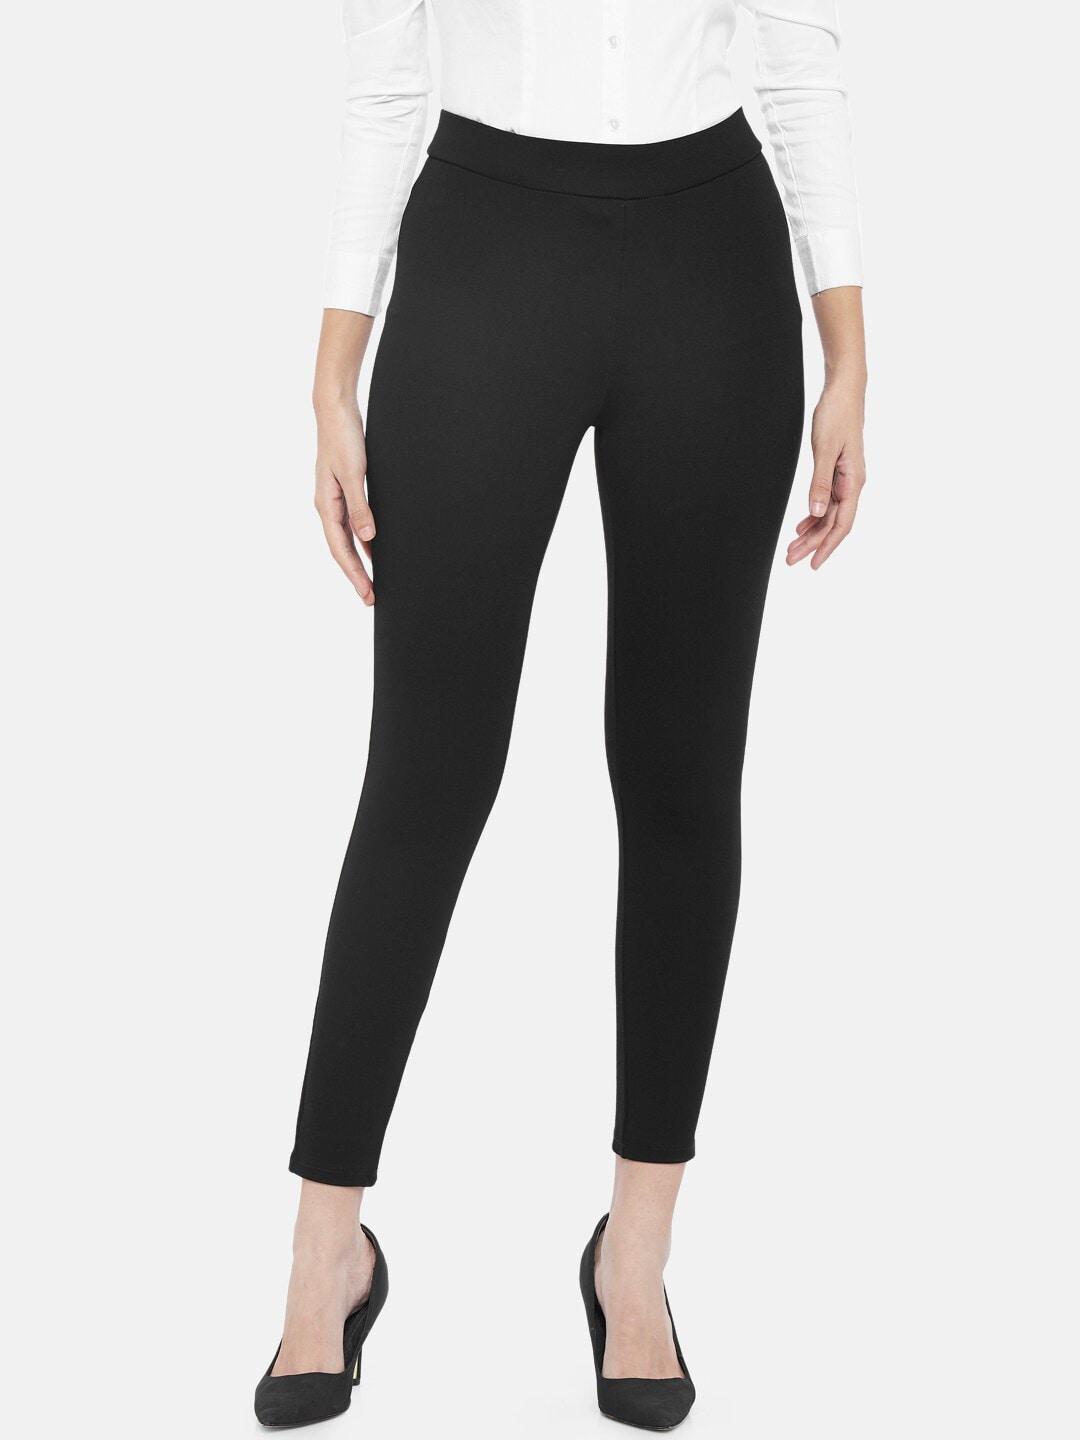 annabelle-by-pantaloons-women-black-solid-slim-fit-treggings